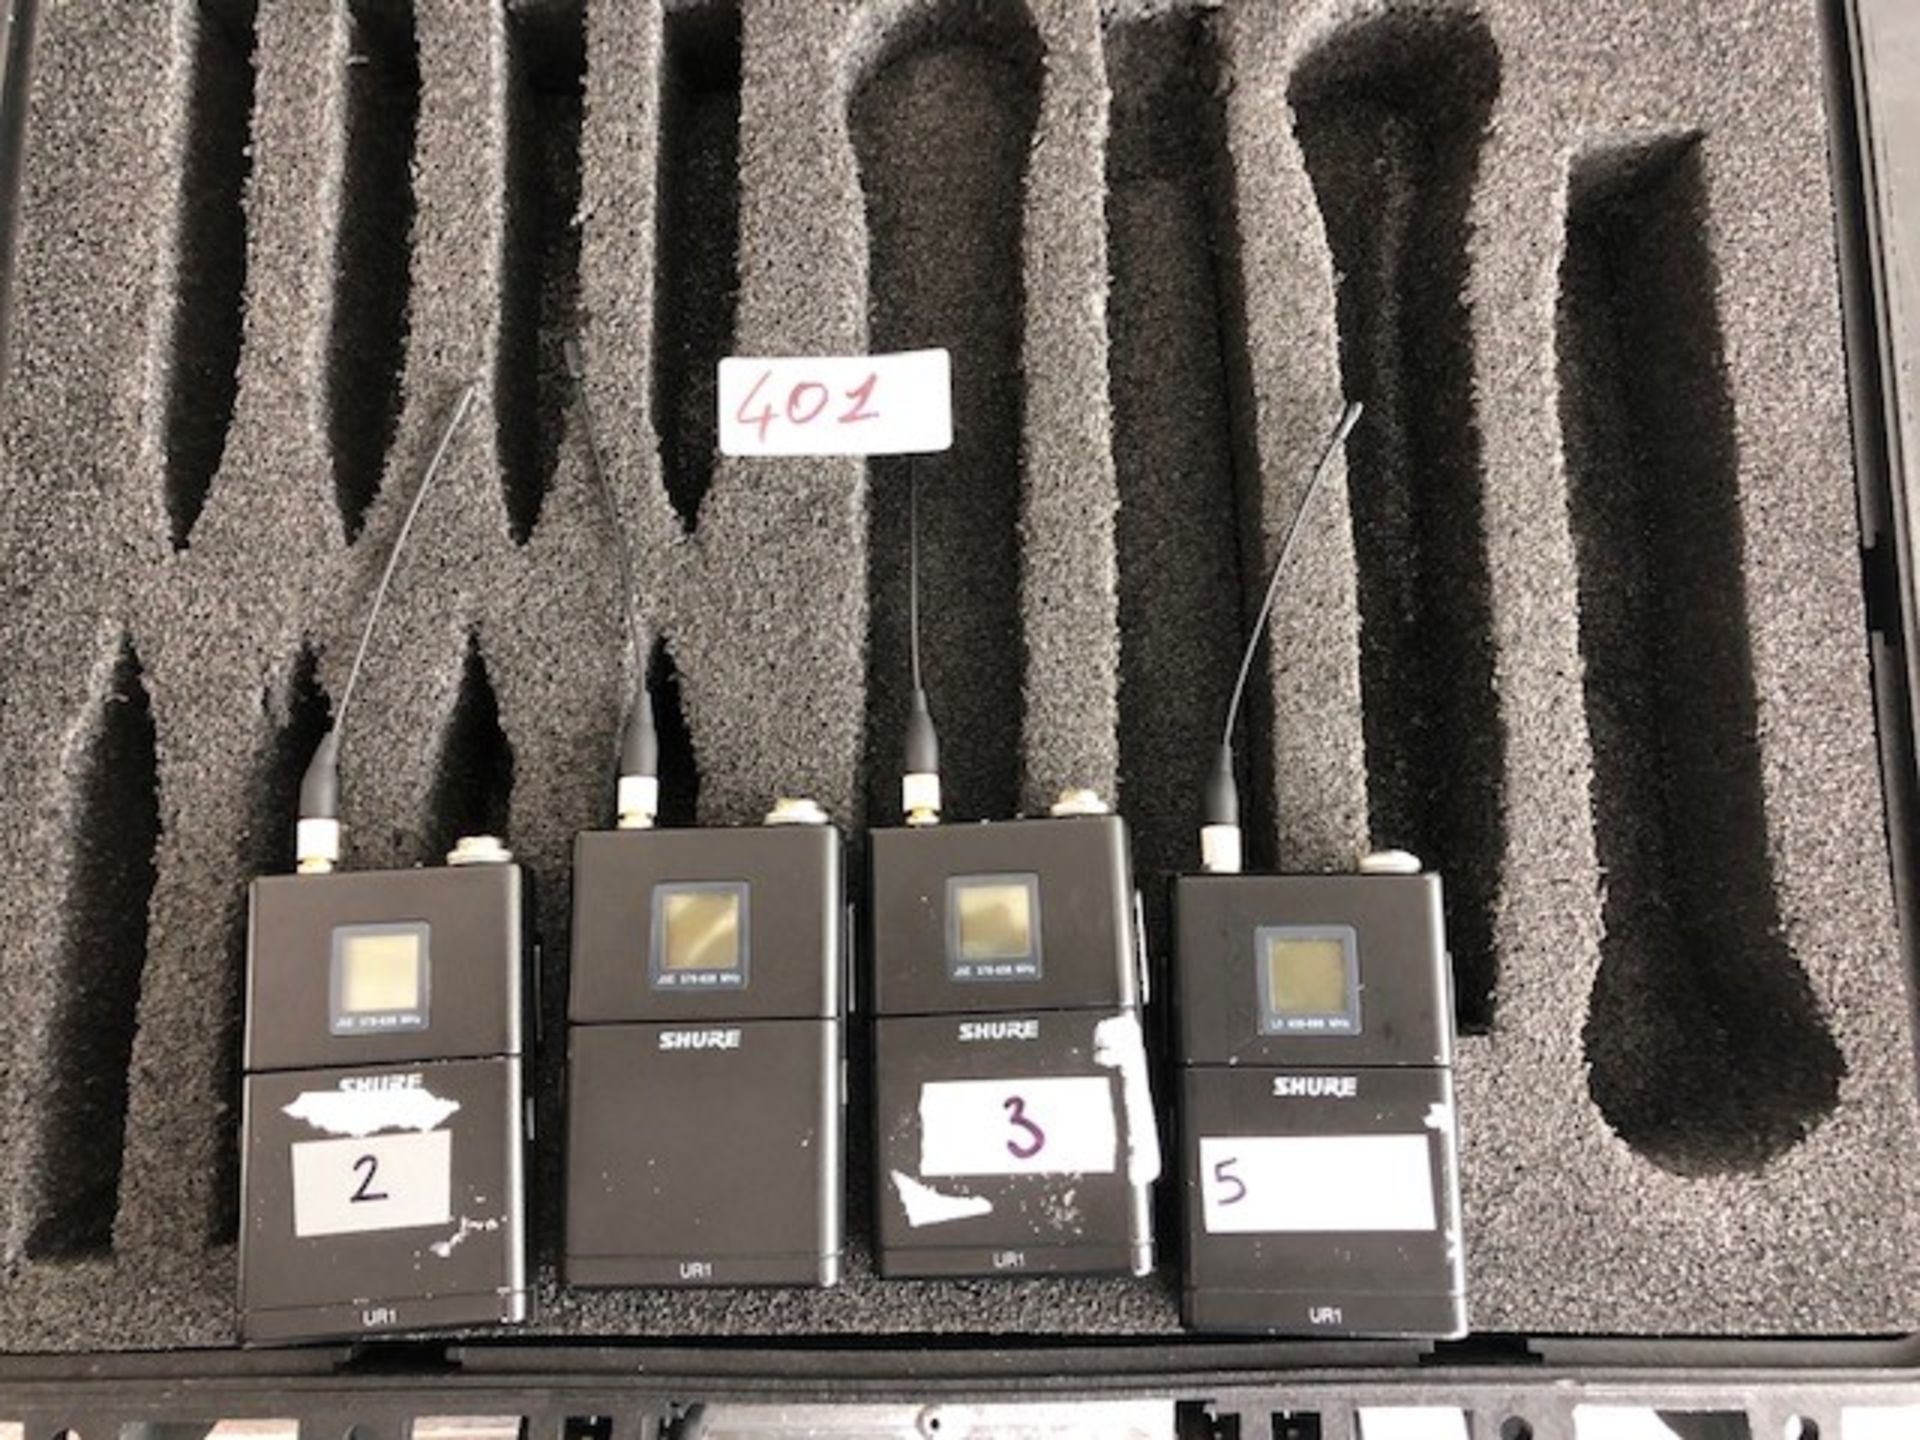 4 x Shure UR1 Transmitters In Plastic Case - Frequency Range: J5E - Ref: 401 - Image 6 of 6